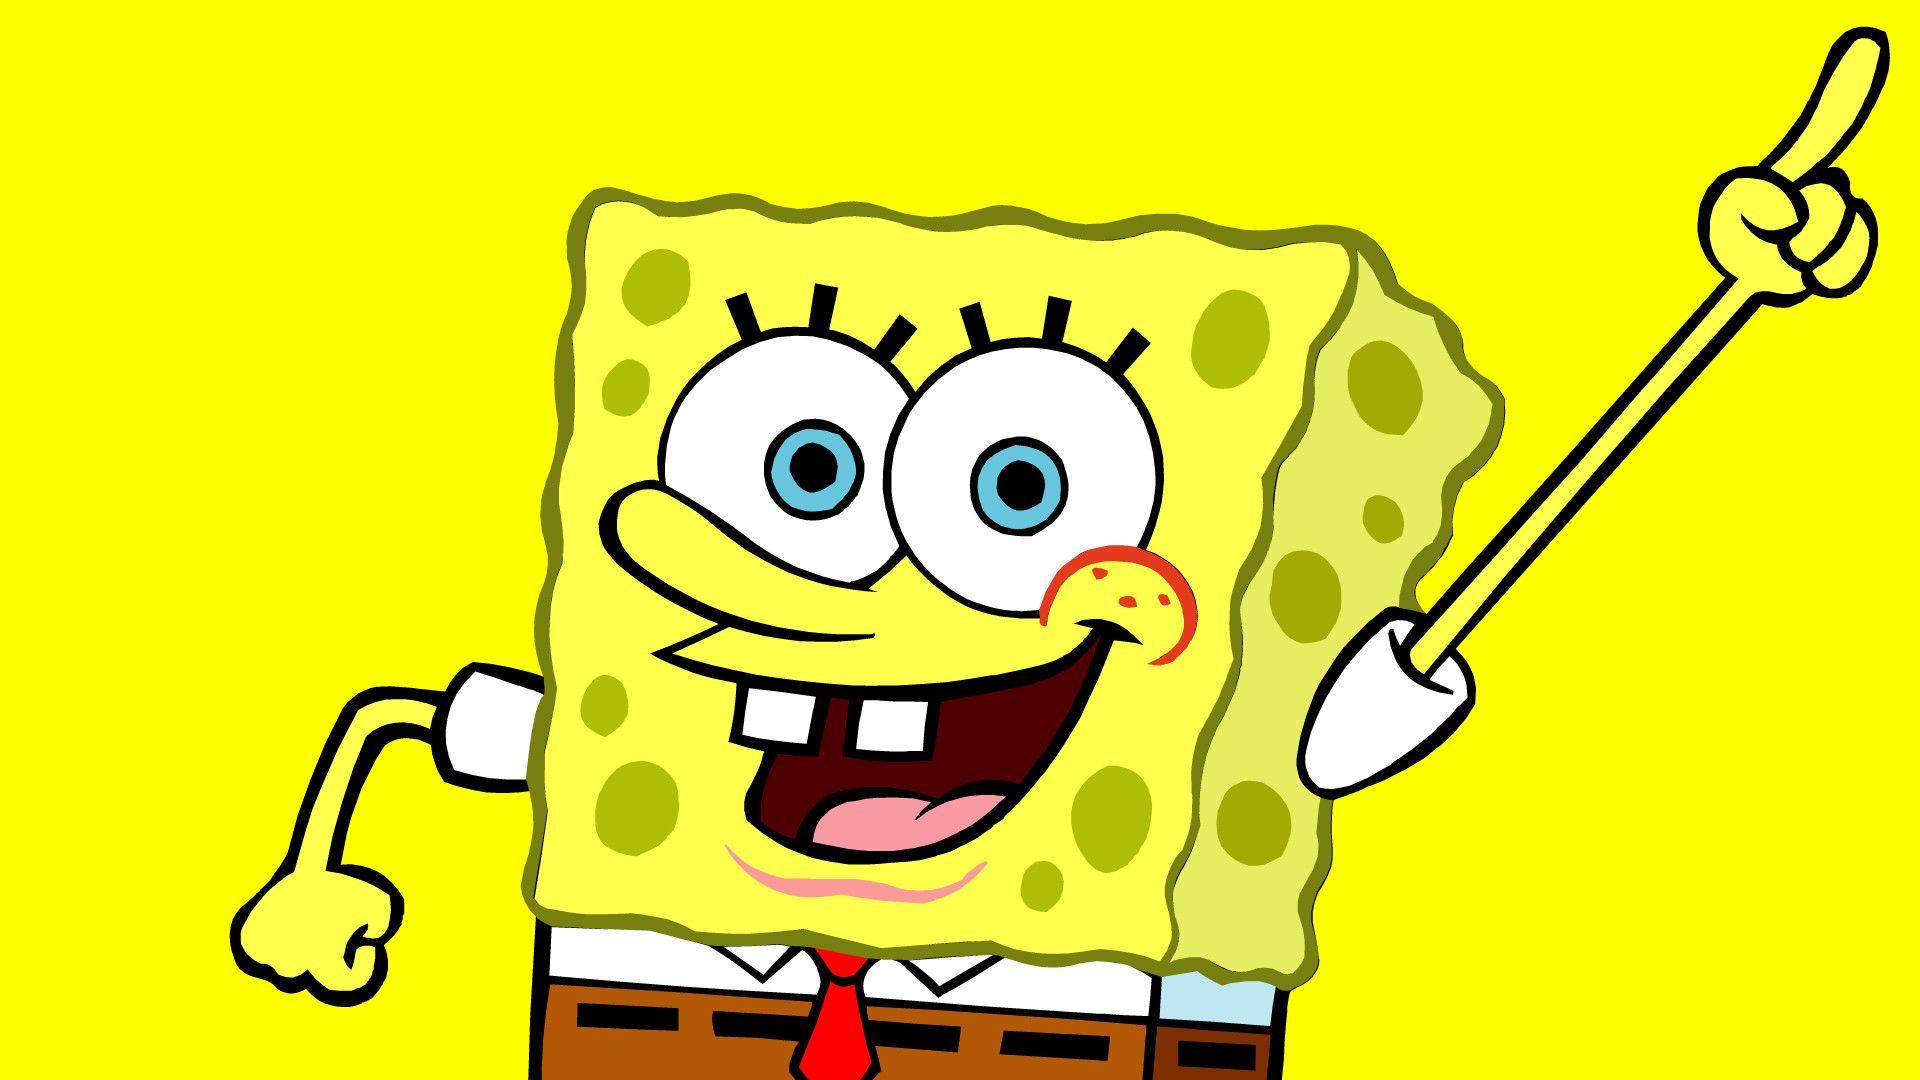 Spongebob Background Wallpaper. Download High Quality Resolution